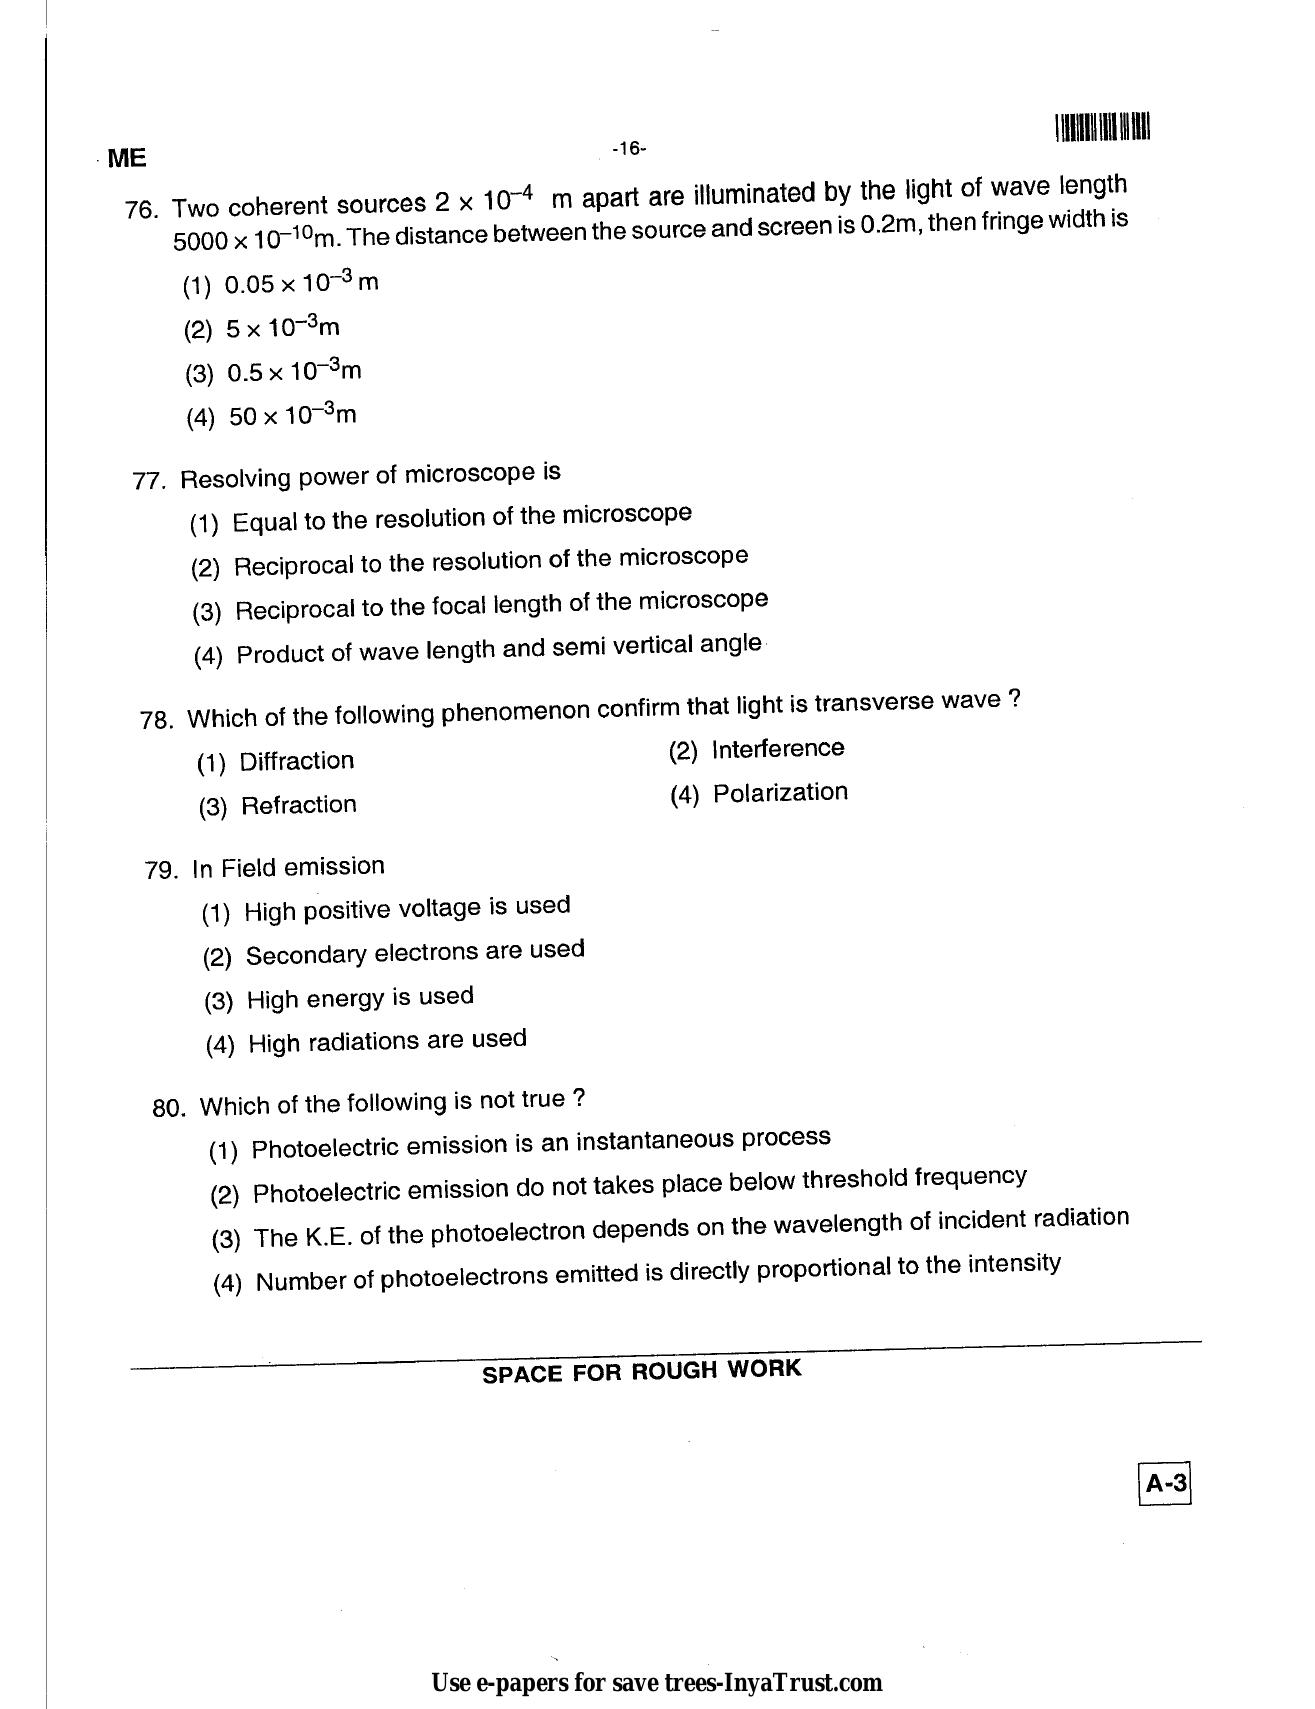 Karnataka Diploma CET- 2013 Mechanical Engineering Question Paper - Page 14